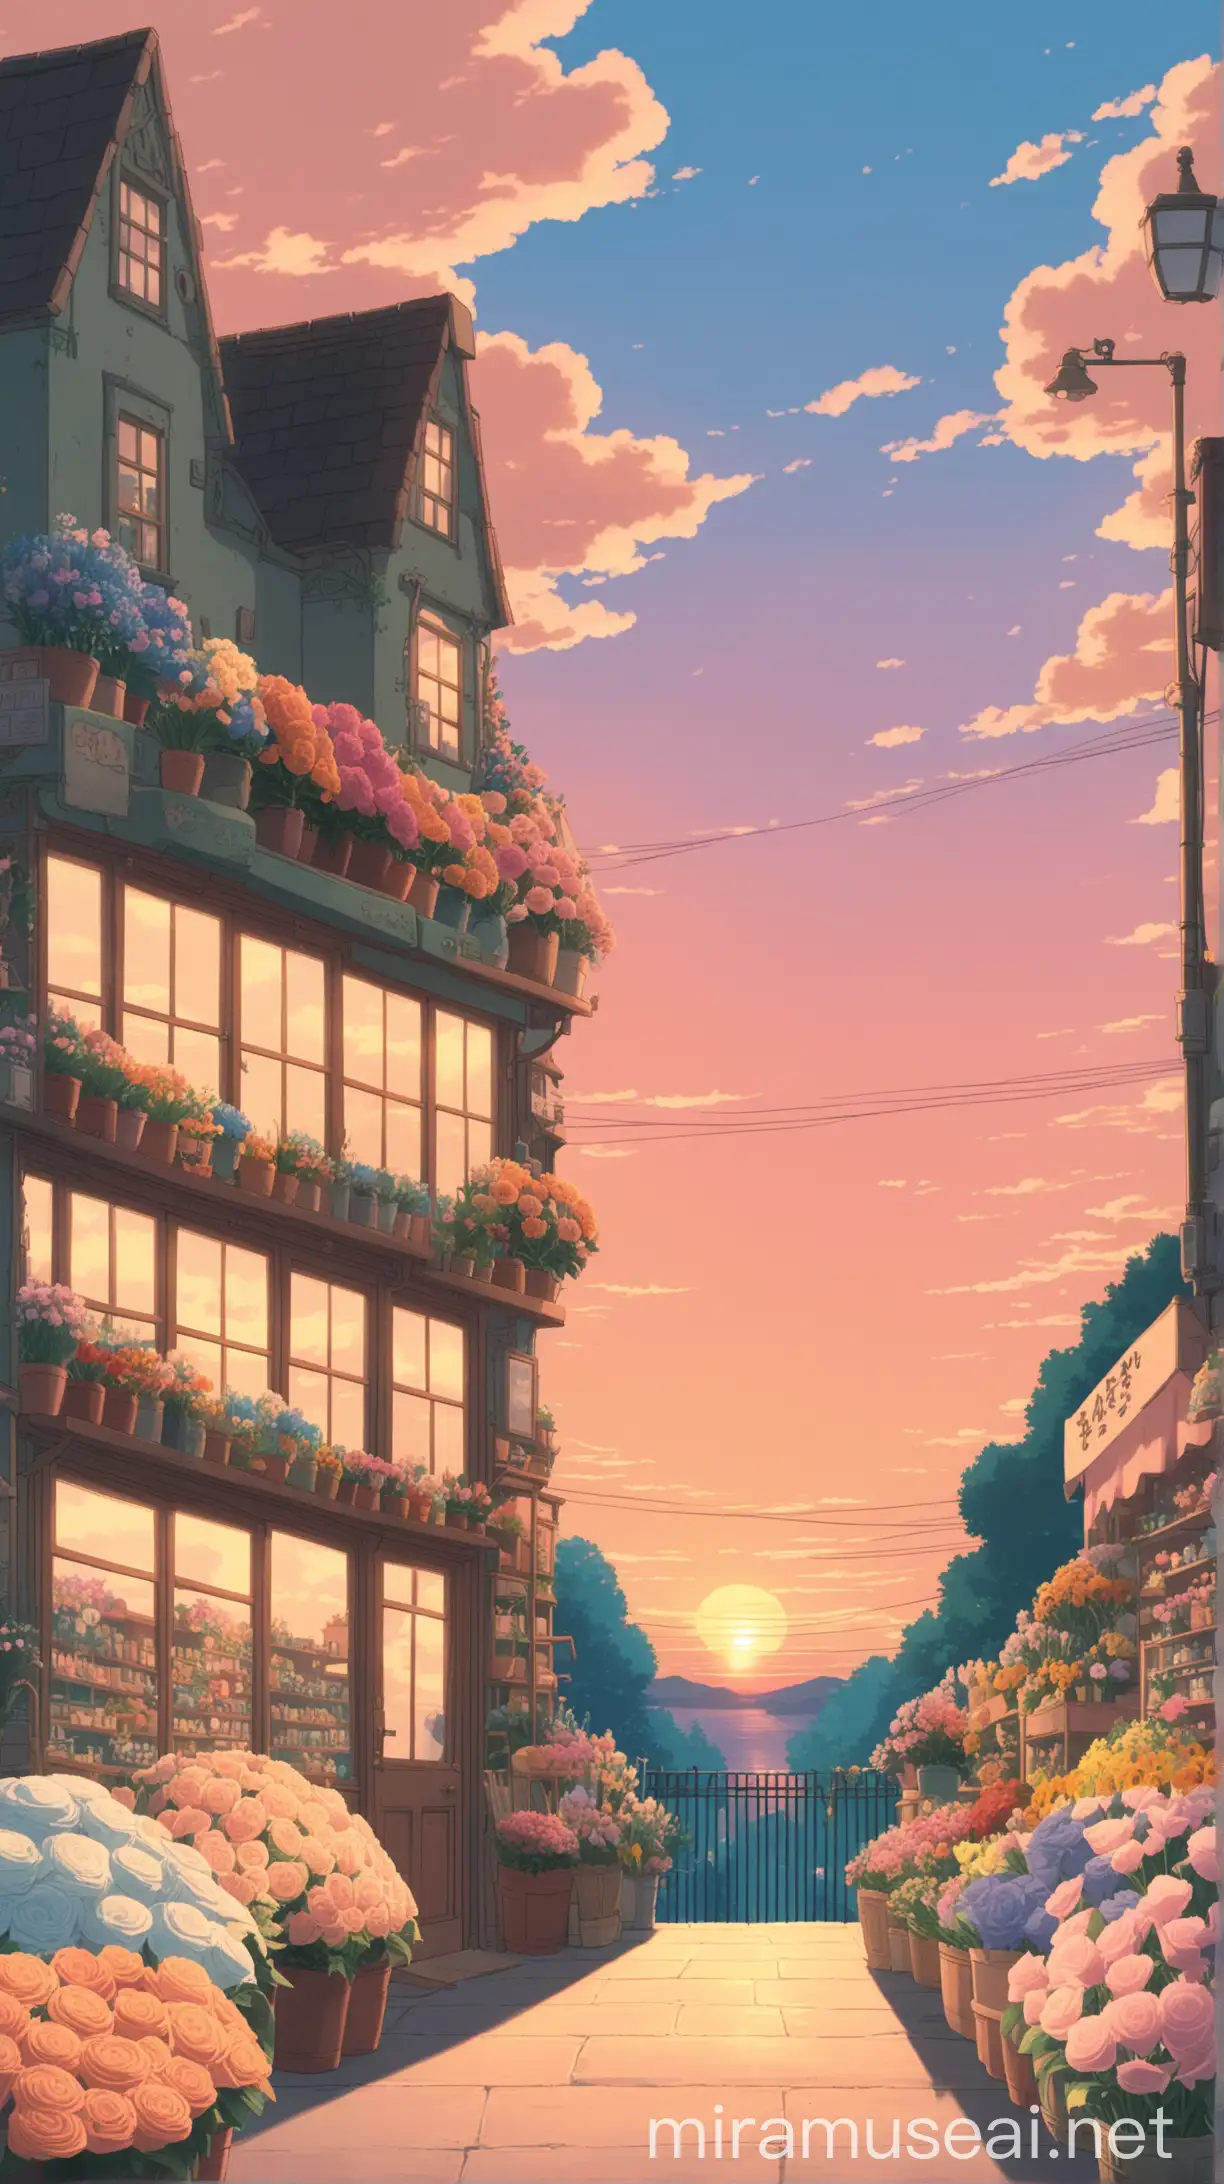 Studio Ghibli wallpaper - flower shop, sunset, sky, aesthetic pastel